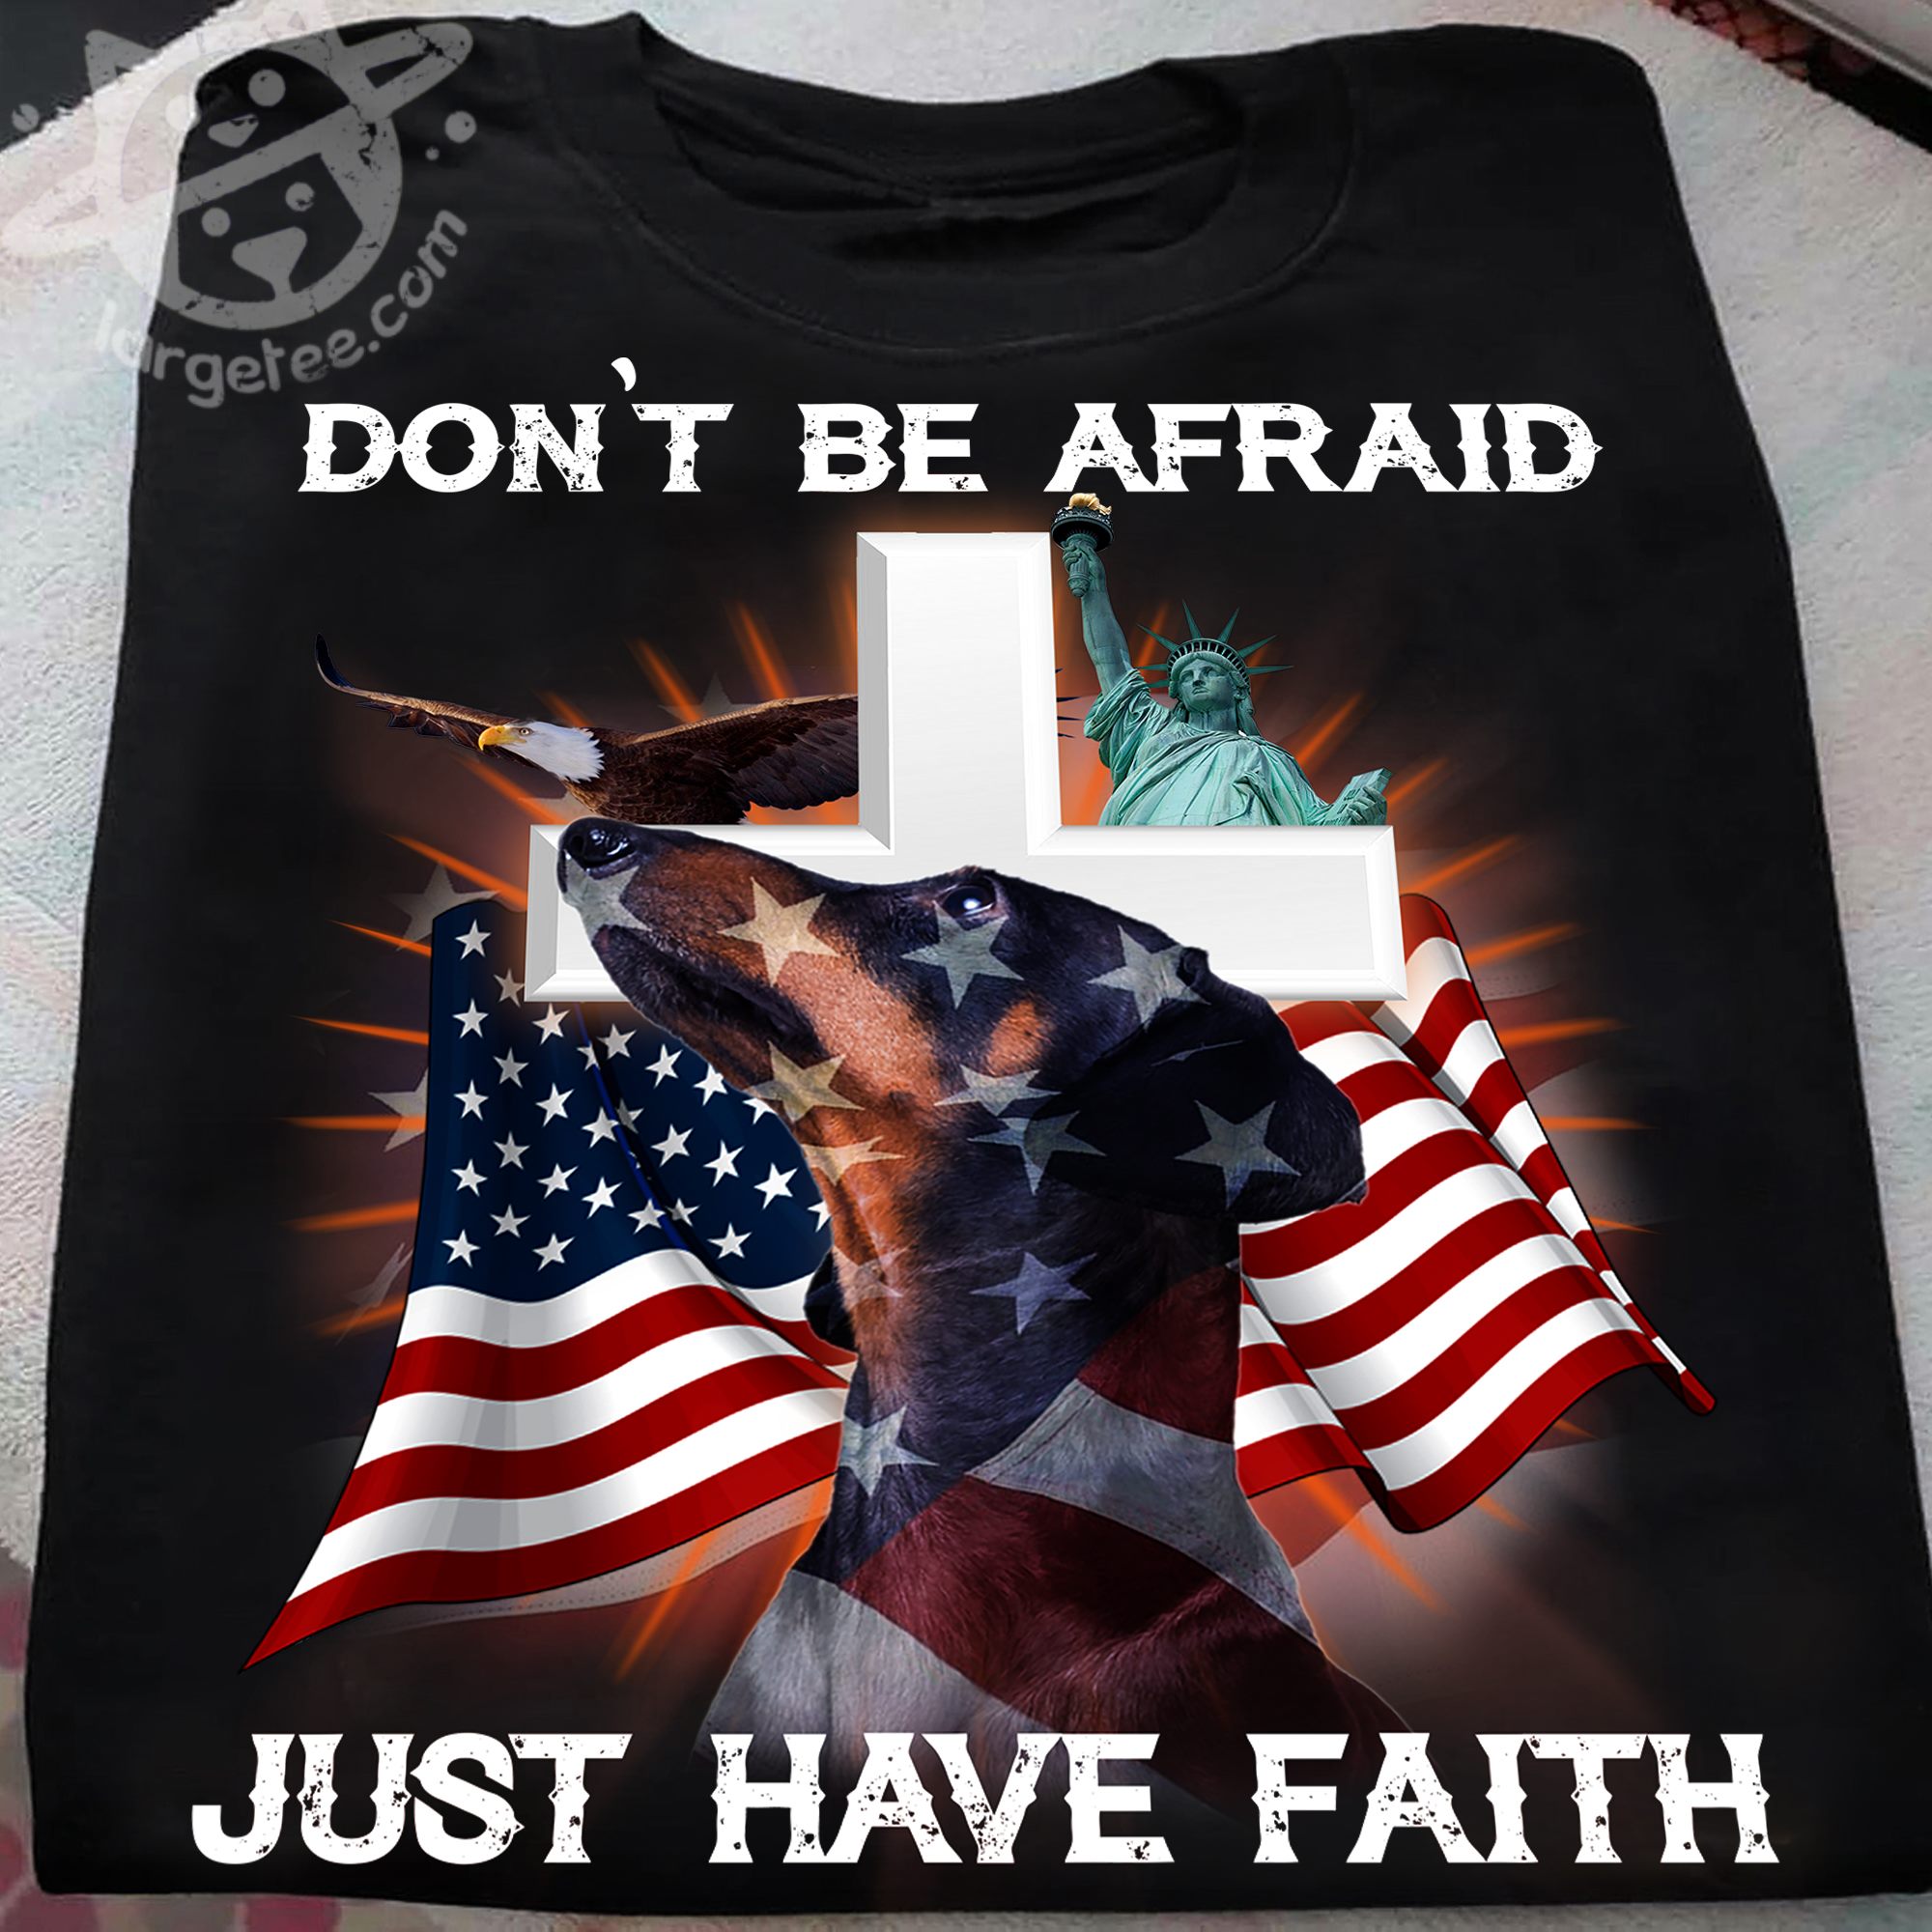 Don't be afraid just have faith - Dachshund dog and America flag